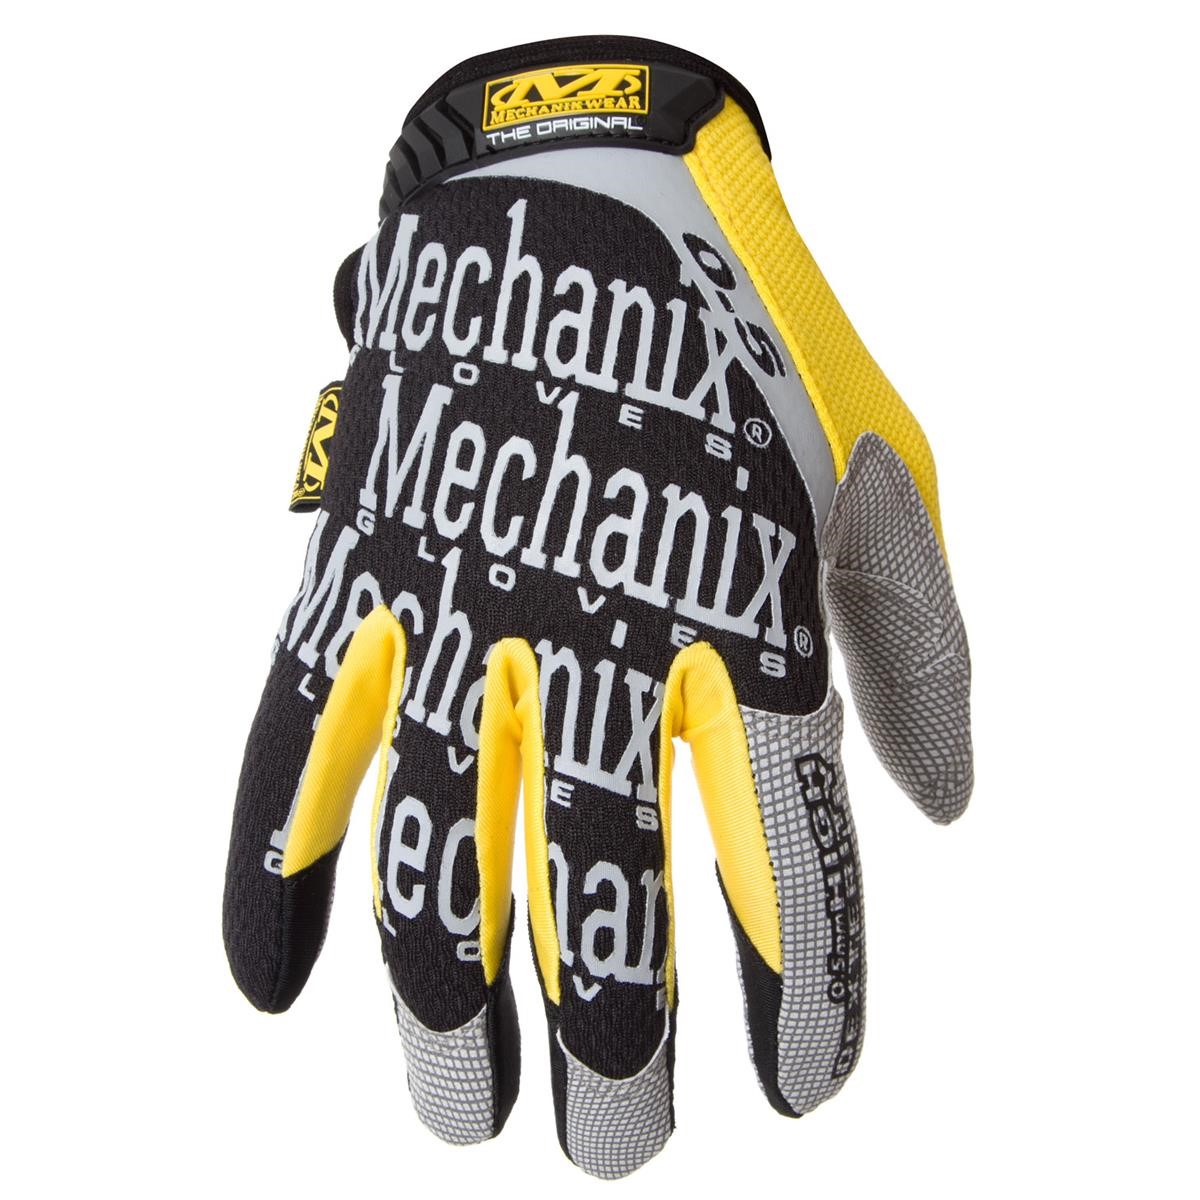 Mechanix Wear Gloves The Original Black - 0.5 mm